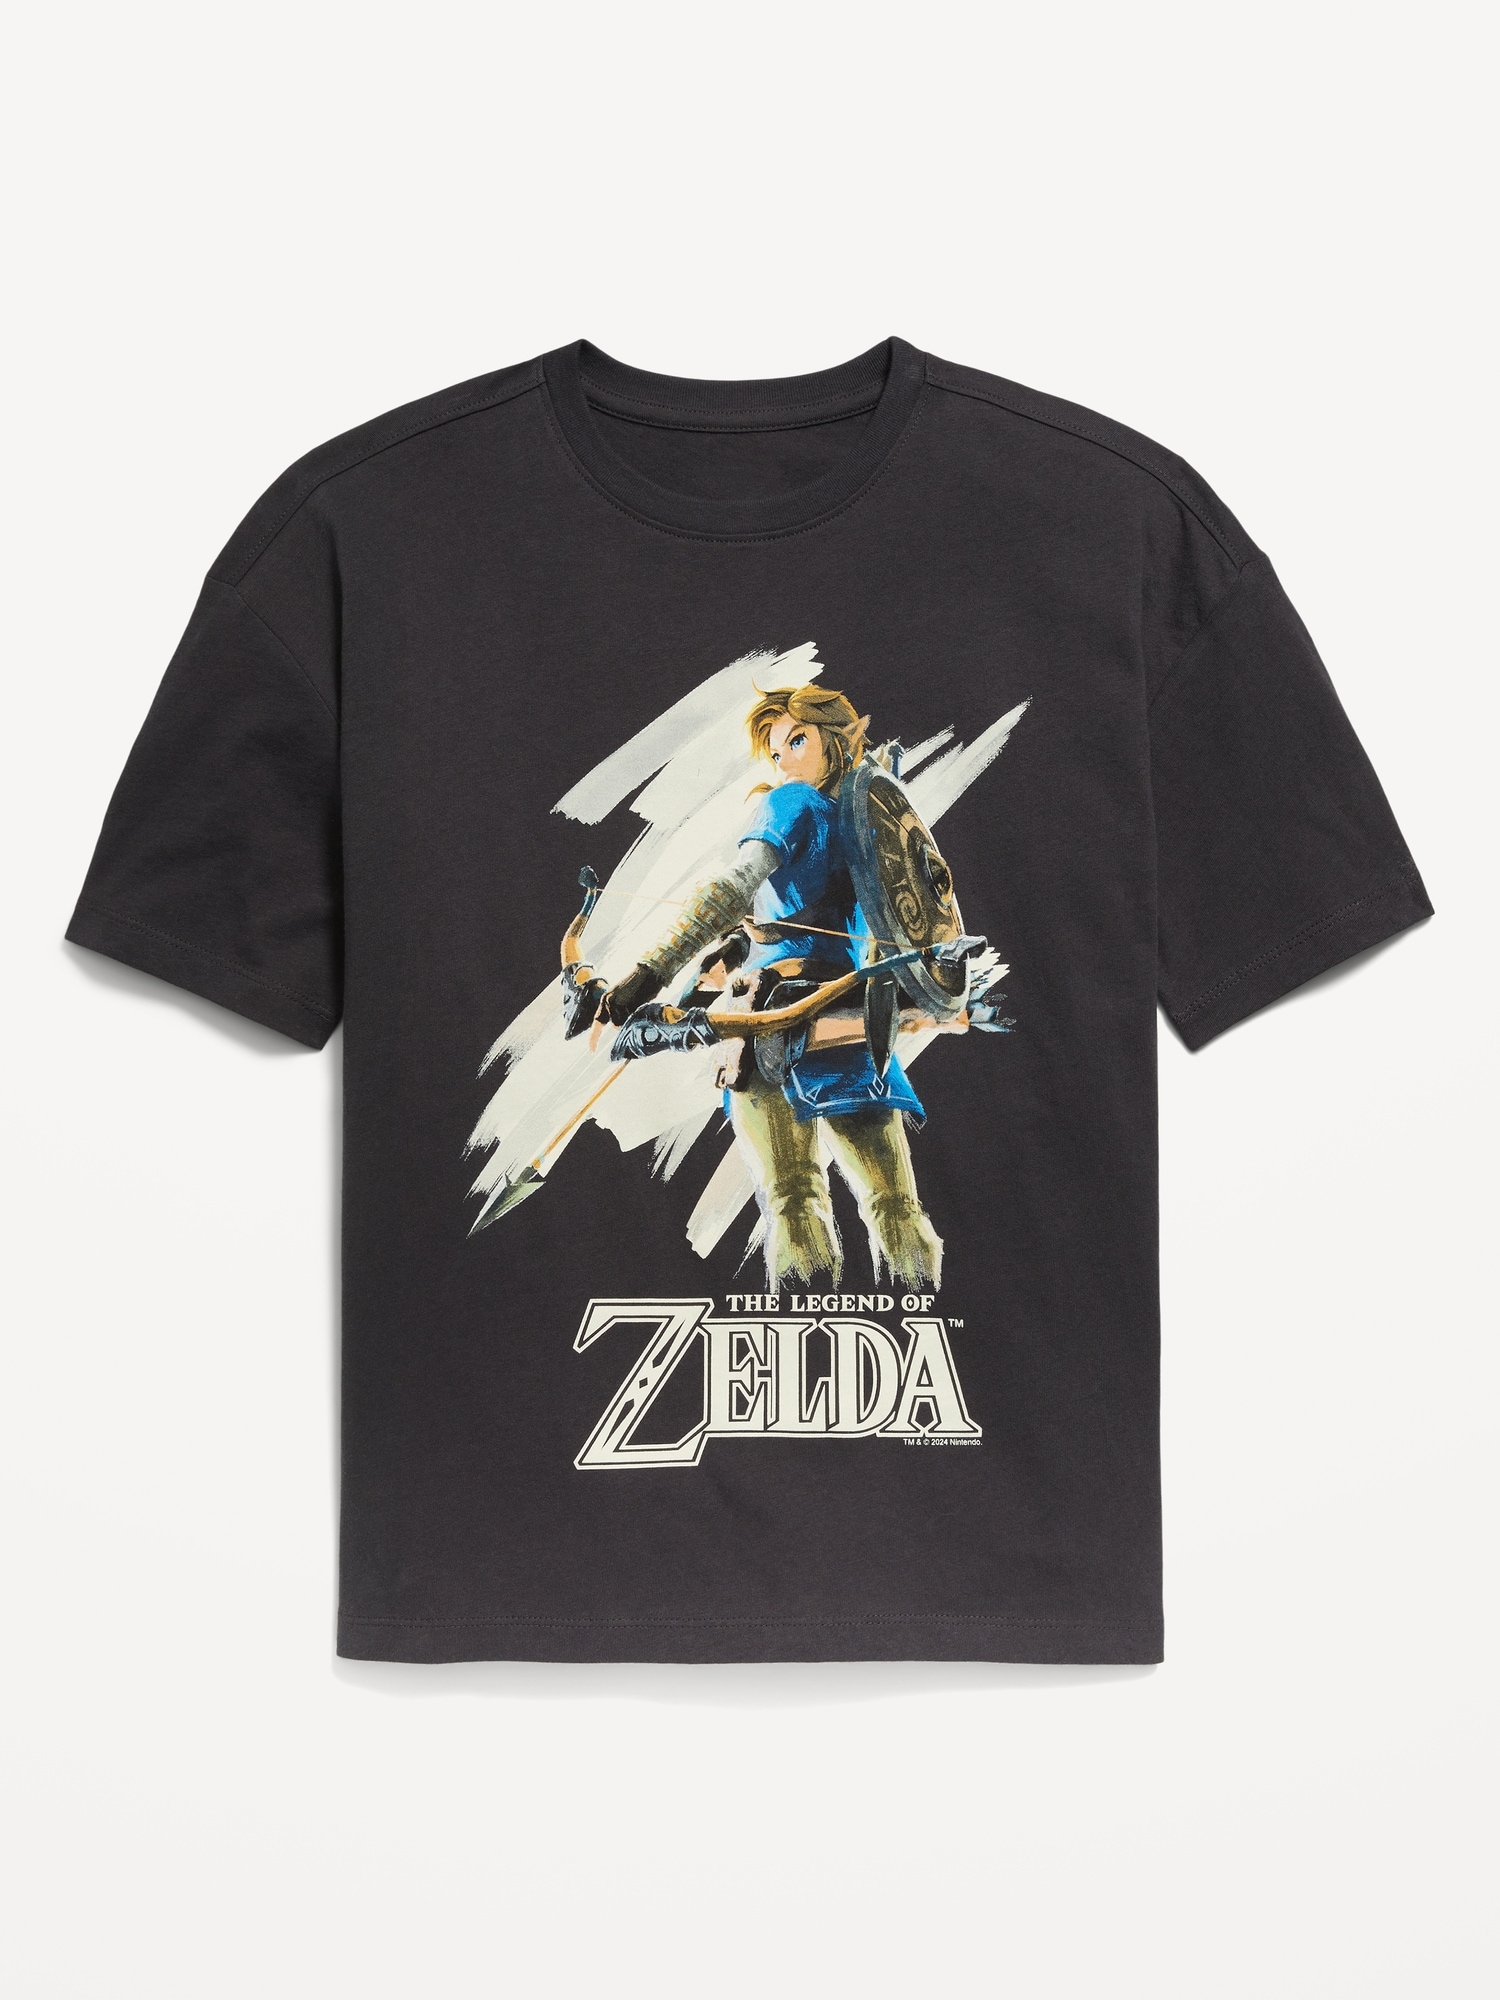 The Legend of Zelda Oversized Gender-Neutral Graphic T-Shirt for Kids